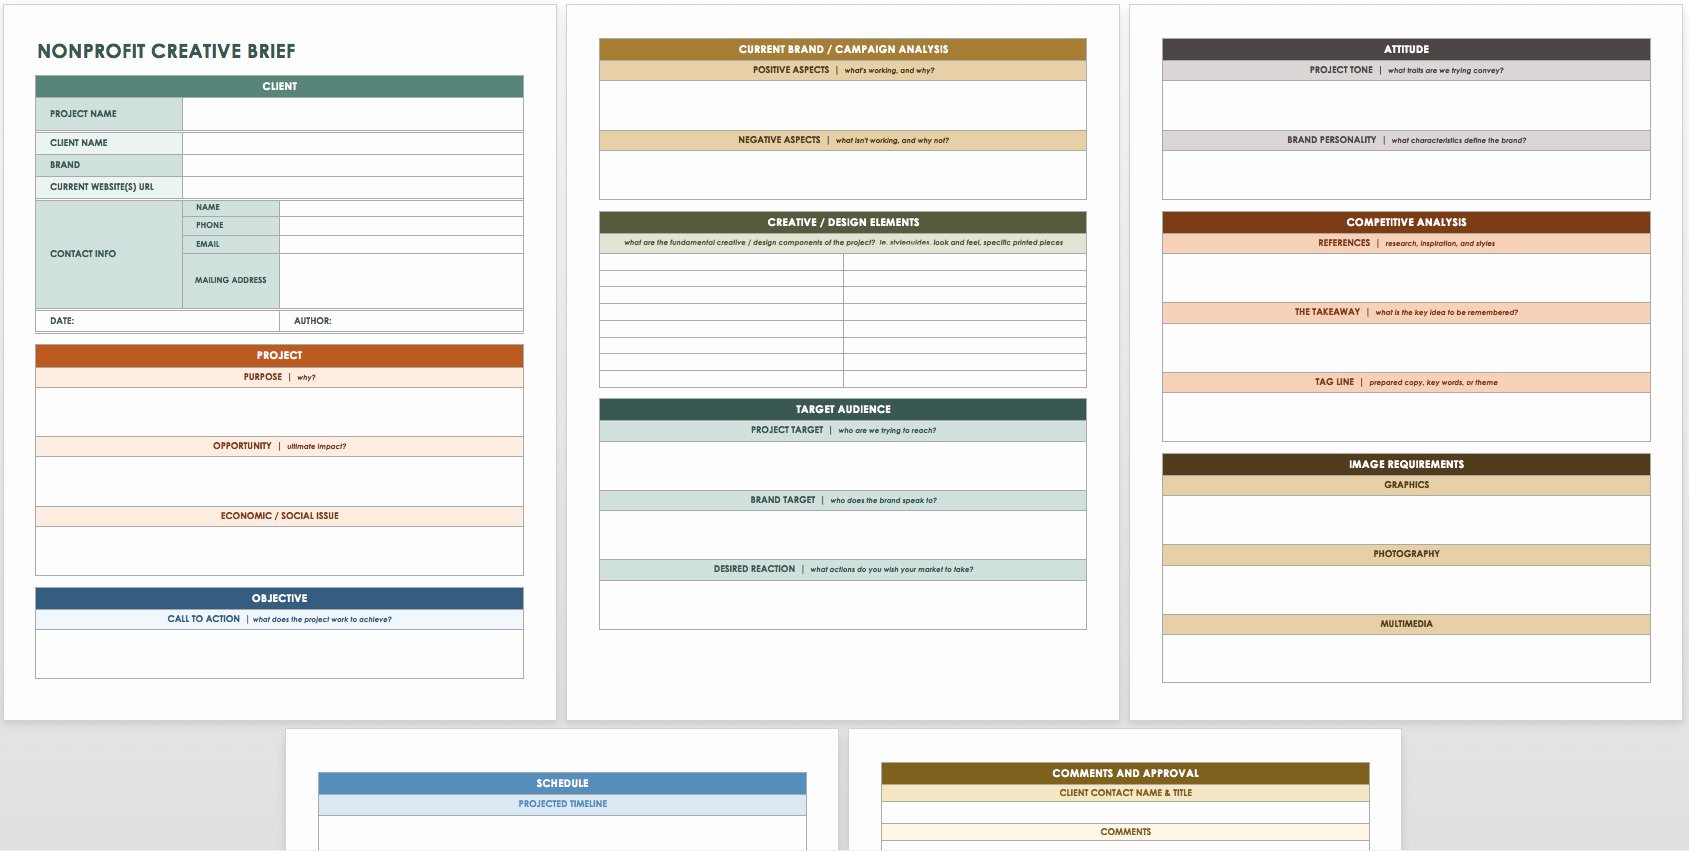 Project Data Sheet Template Beautiful Free Creative Brief Templates Smartsheet